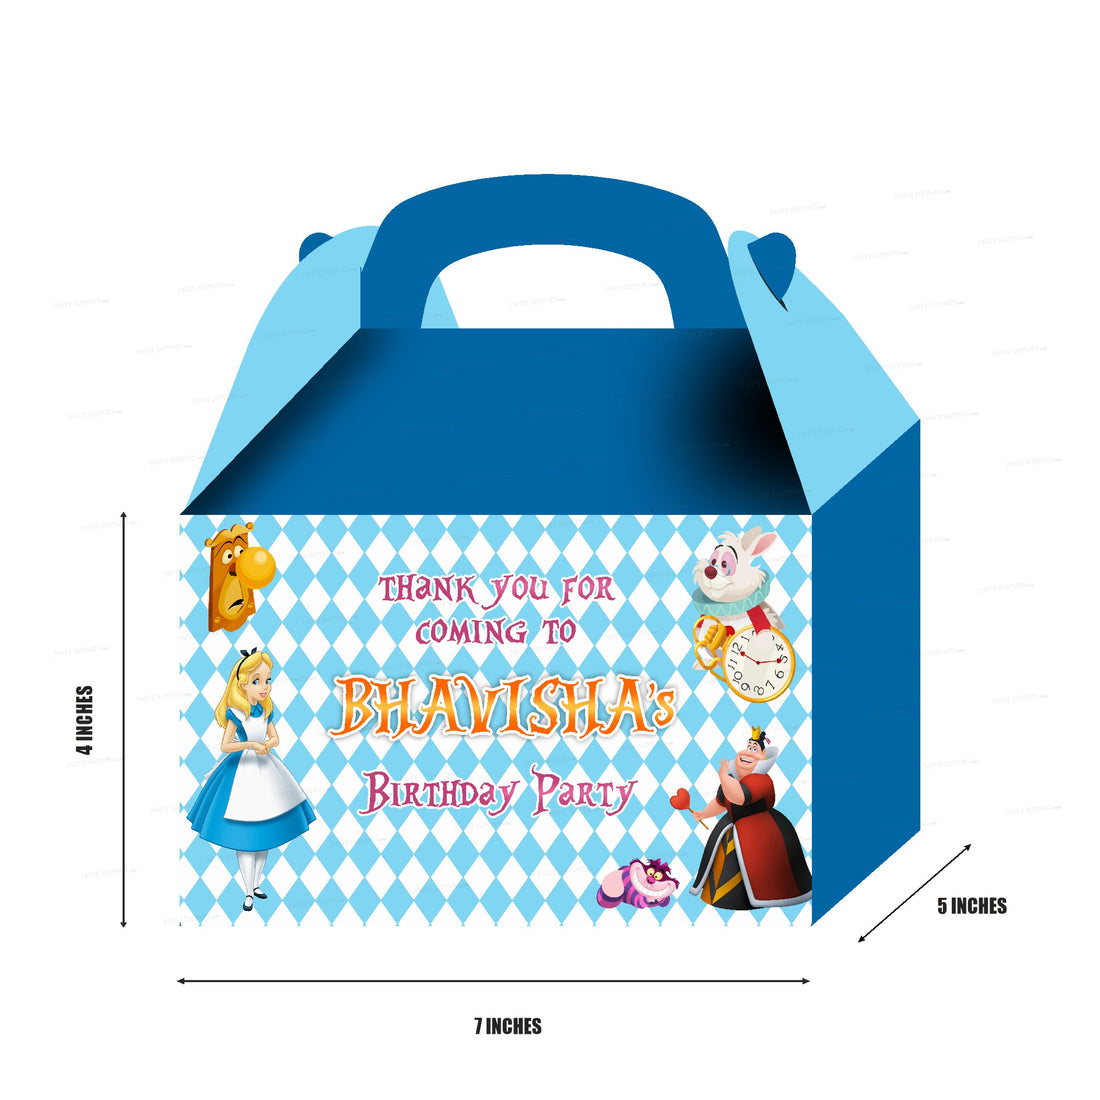 PSI Alice in Wonderland theme Goodie Return Gift Boxes